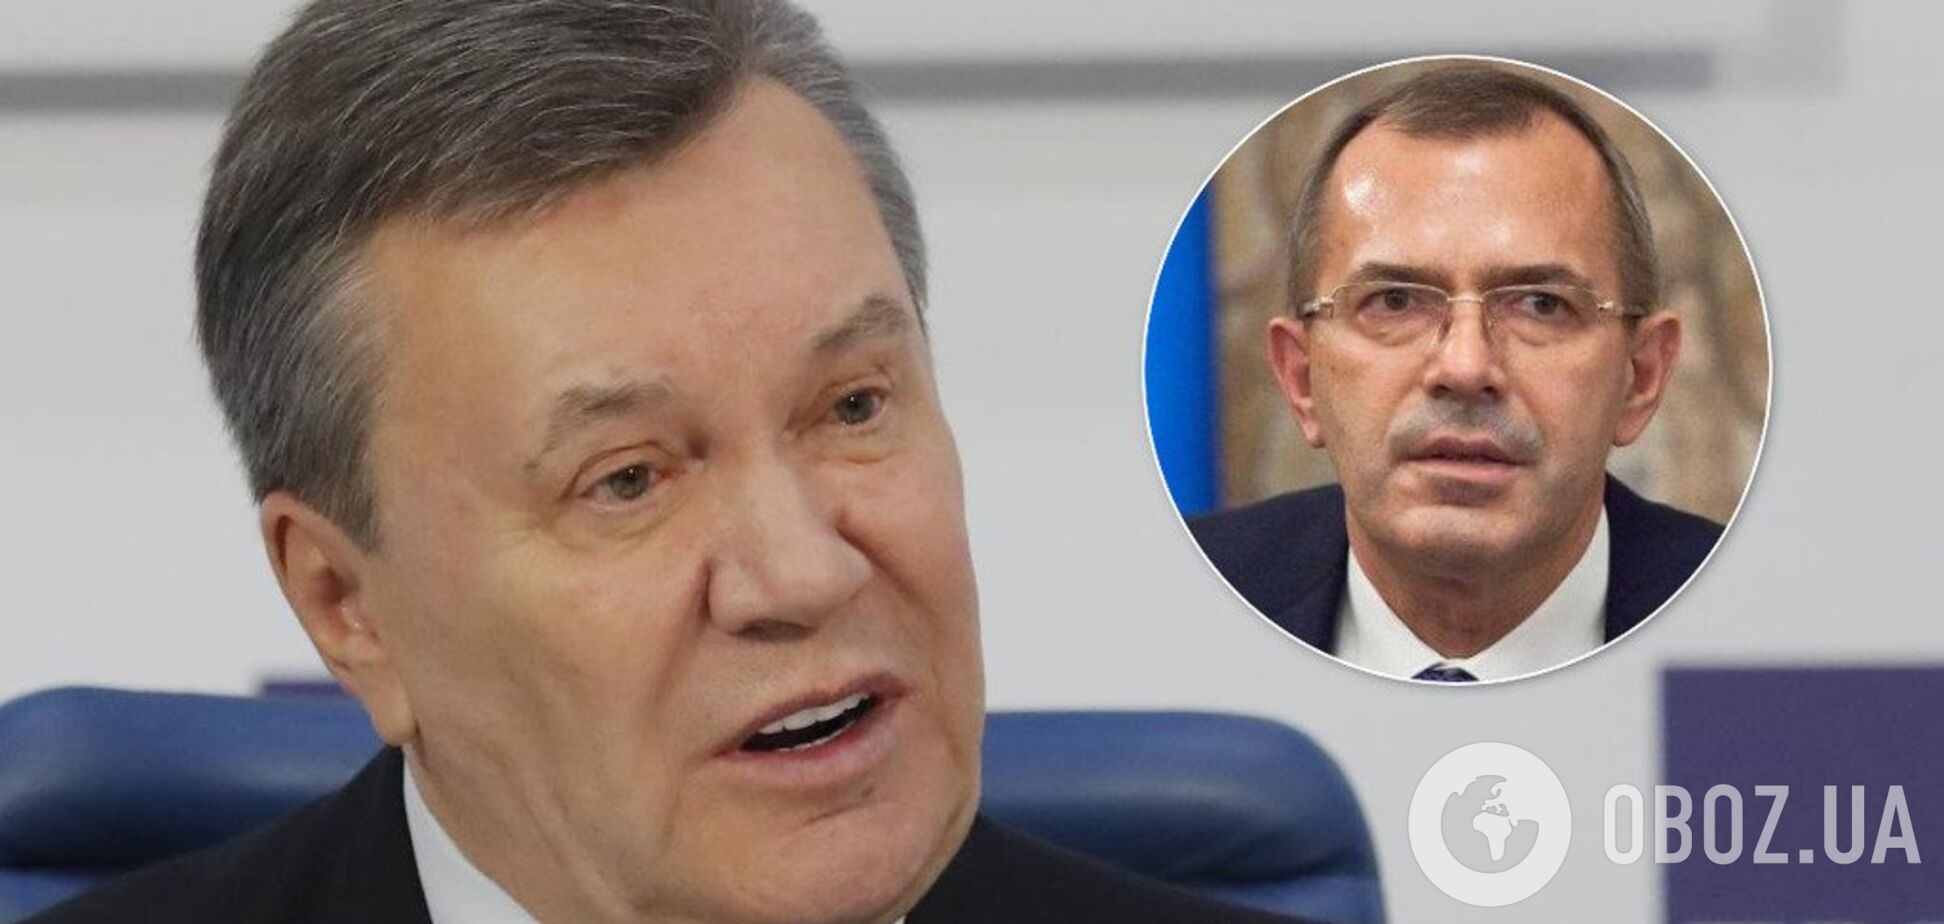 ЦВК зареєструвала екс-голову АП Януковича кандидатом в нардепи